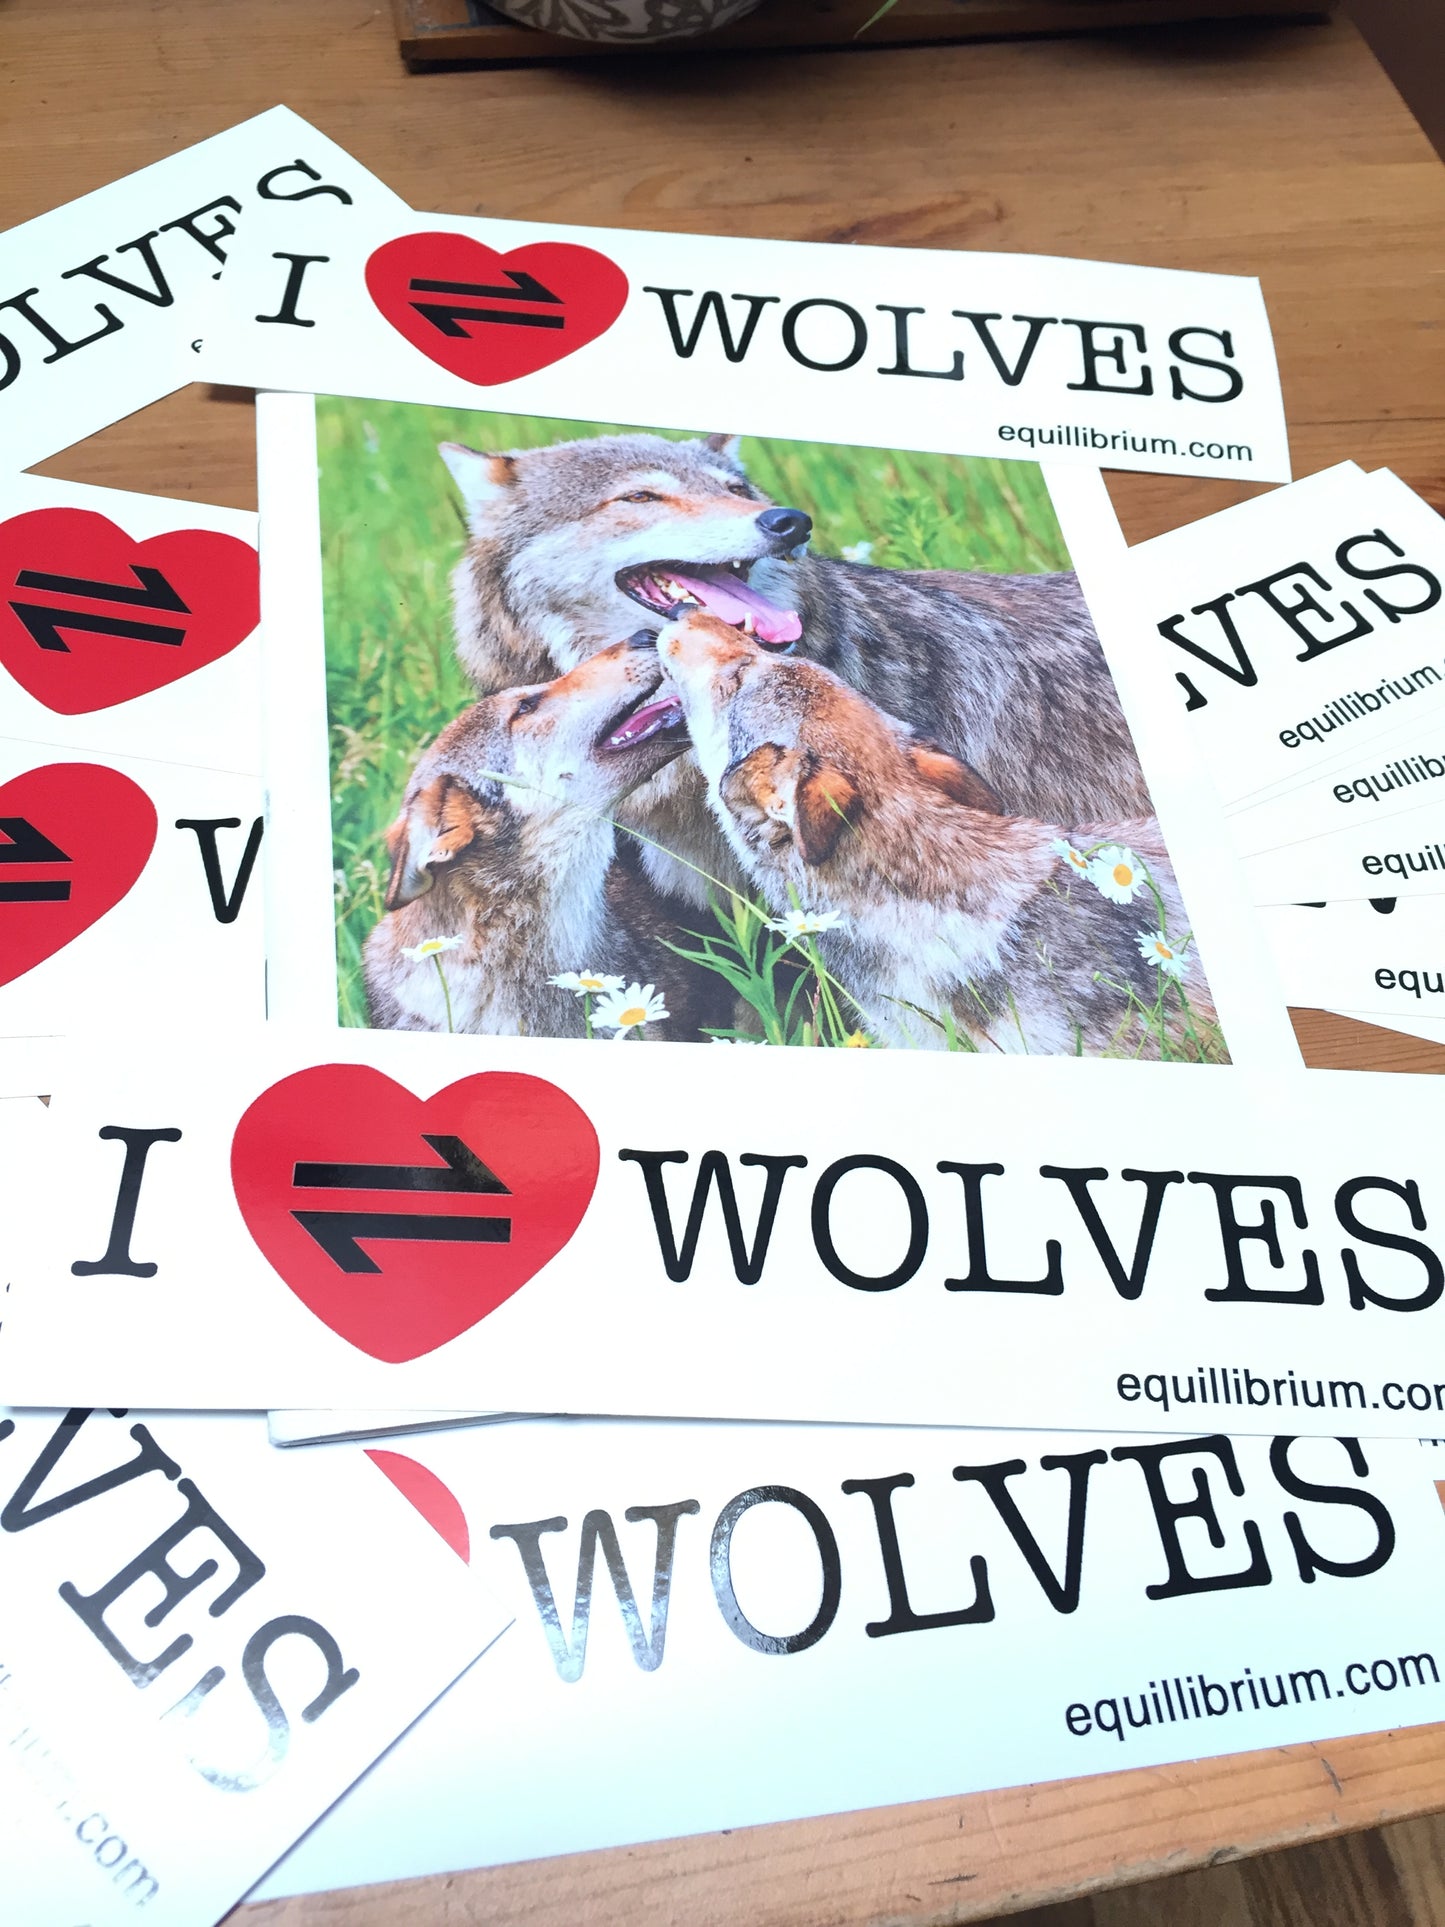 EQ "I LOVE WOLVES" bumper sticker